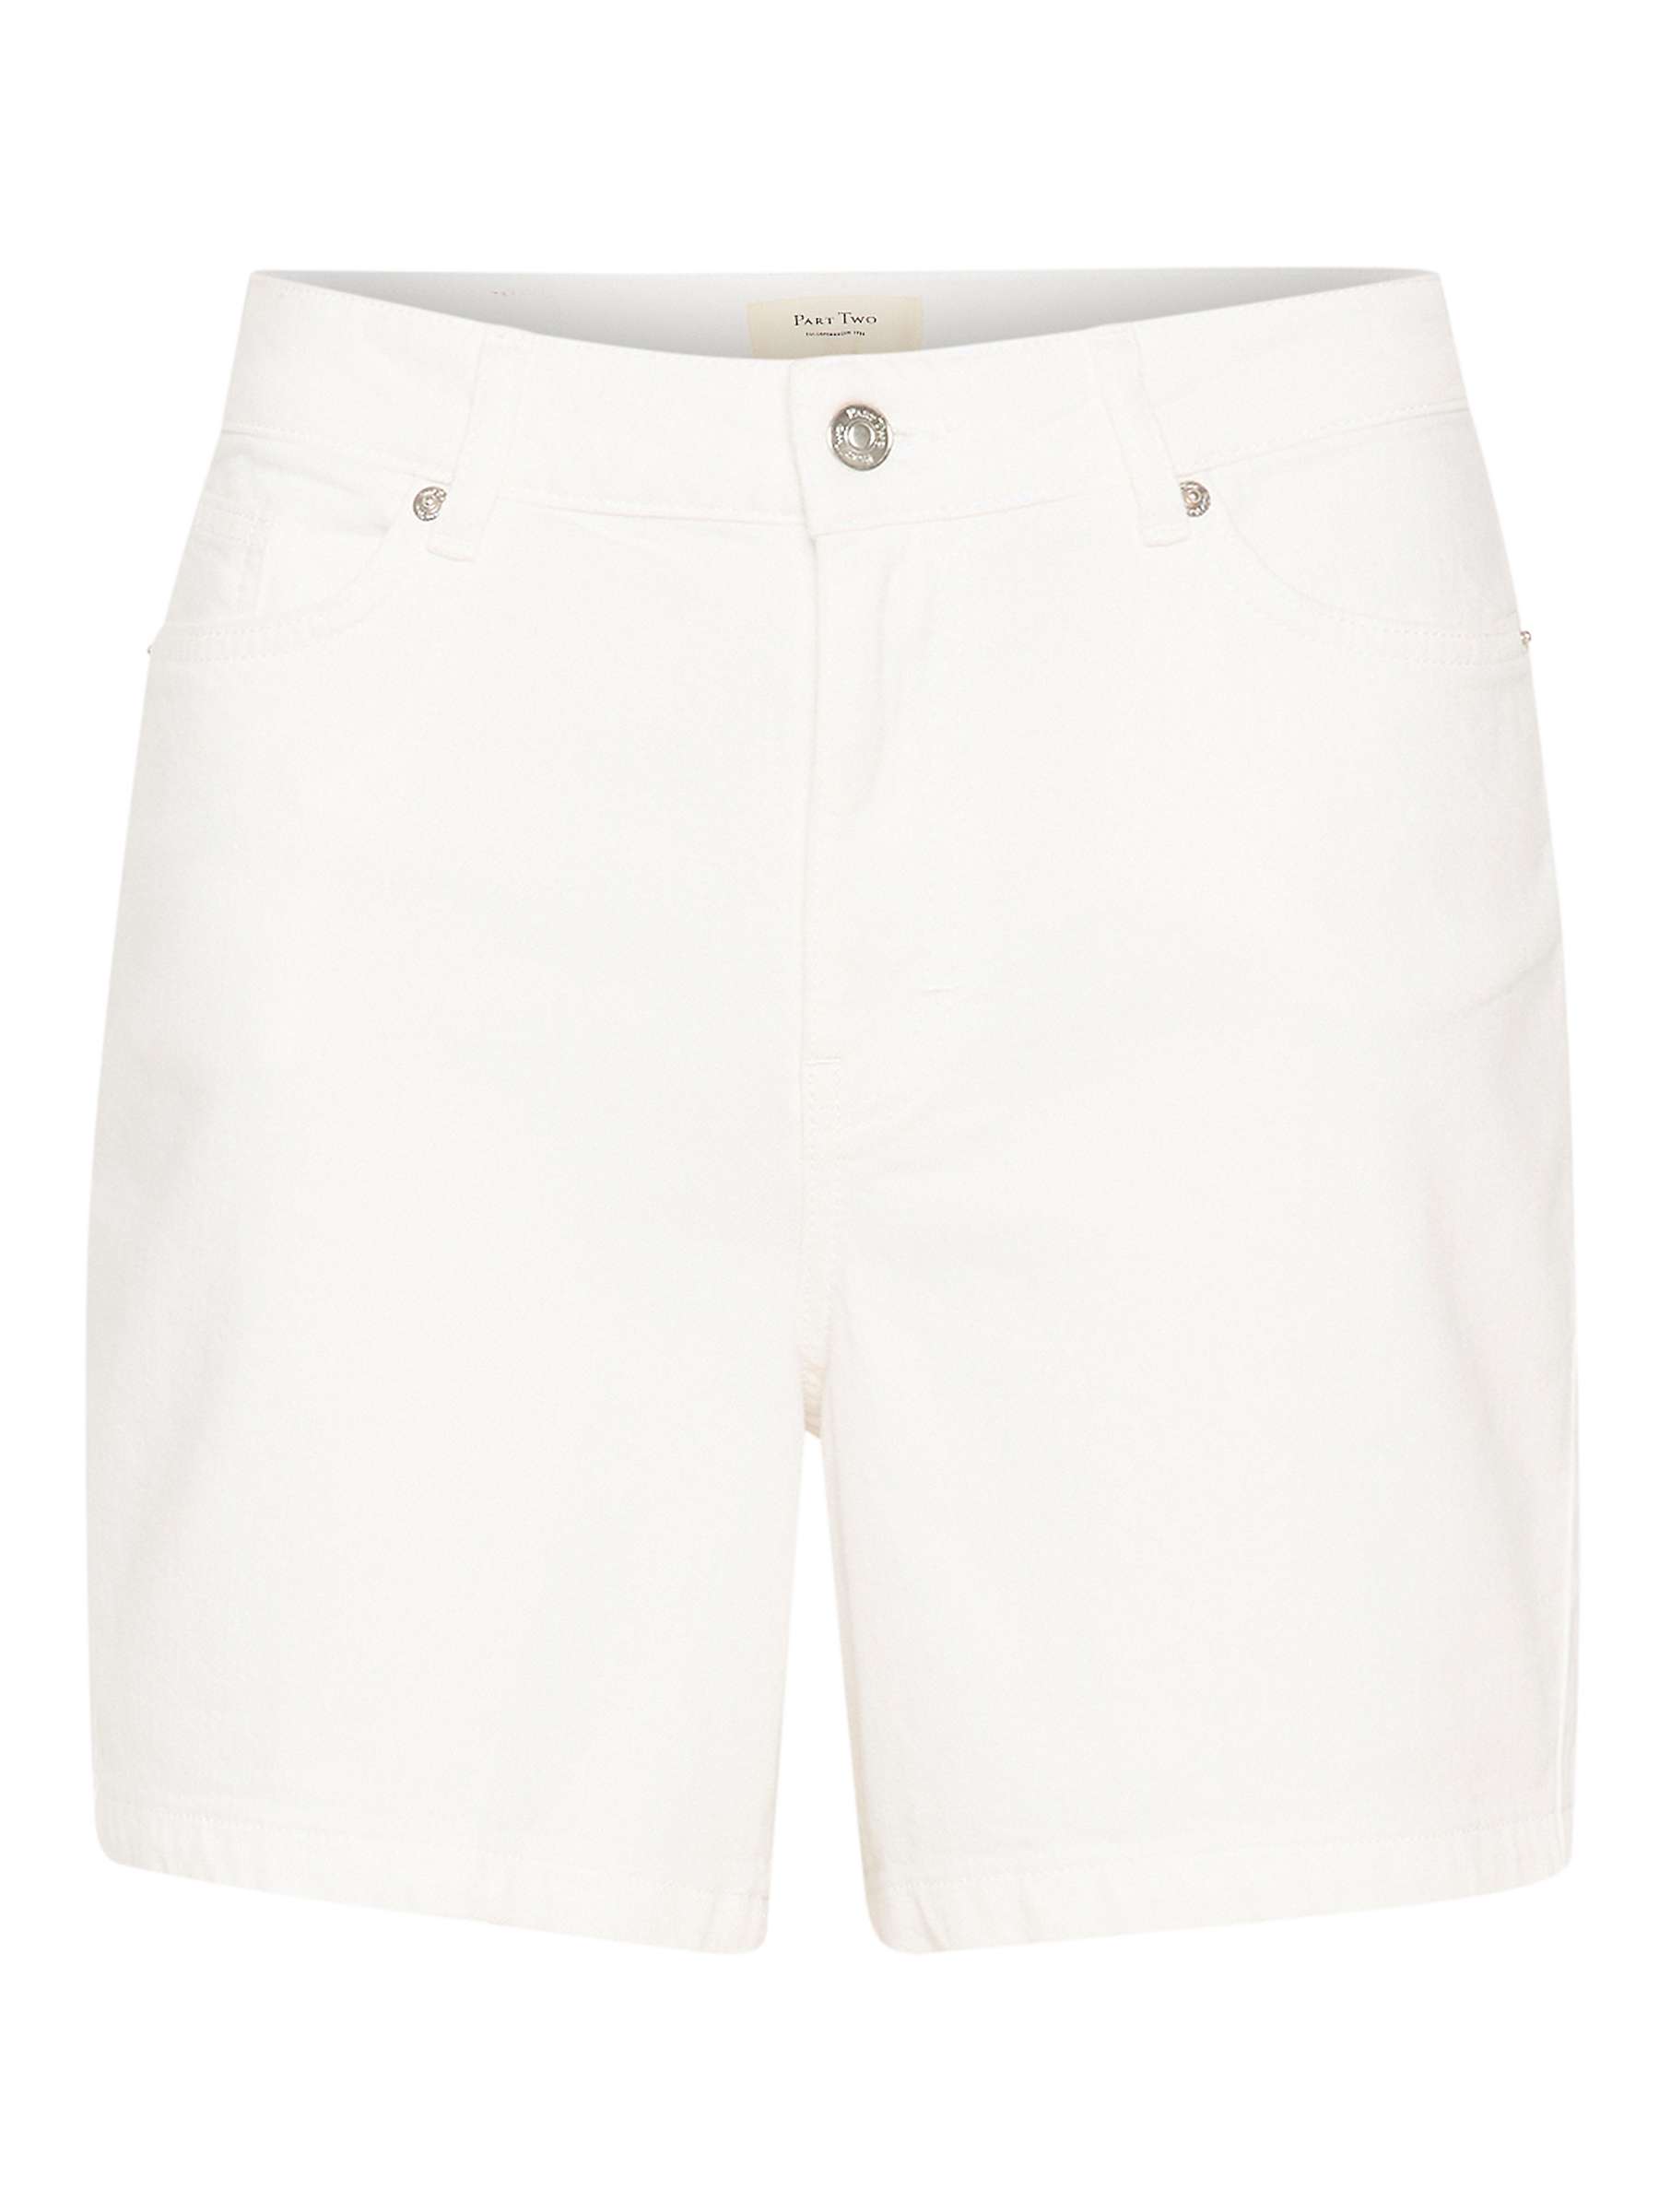 Buy Part Two Gida High Waist Denim Shorts, Bright White Online at johnlewis.com